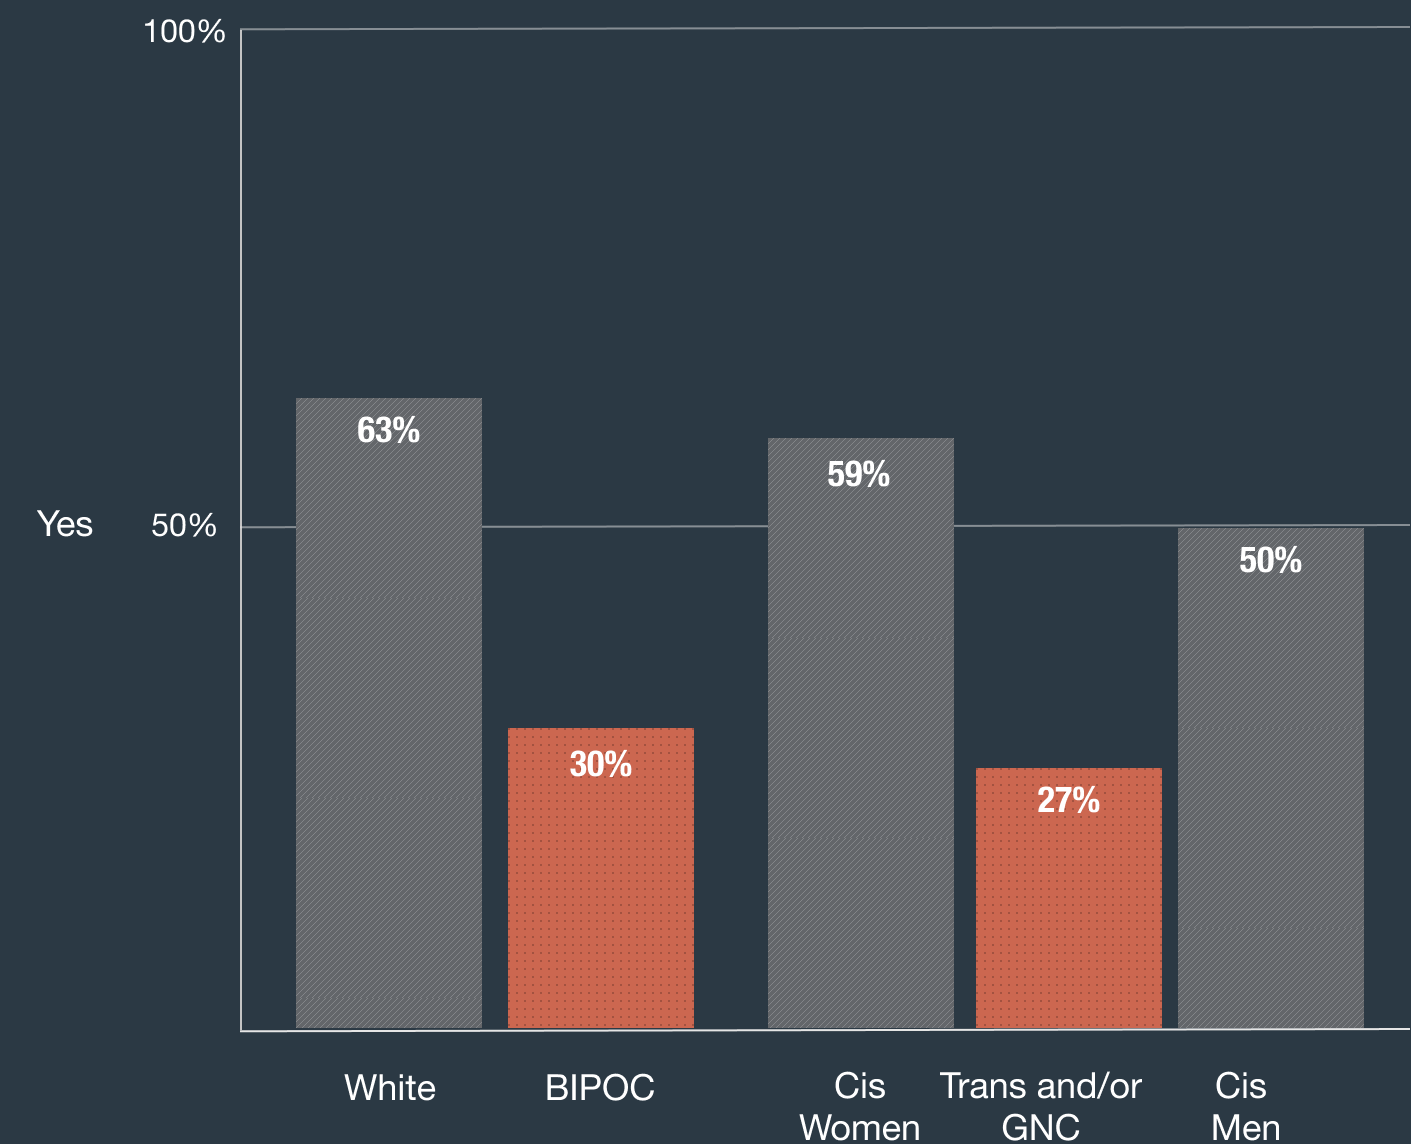 White: 63%, BIPOC: 30%, Cis Women: 59%, Trans and/or GNC: 27%, Cis Men: 50%